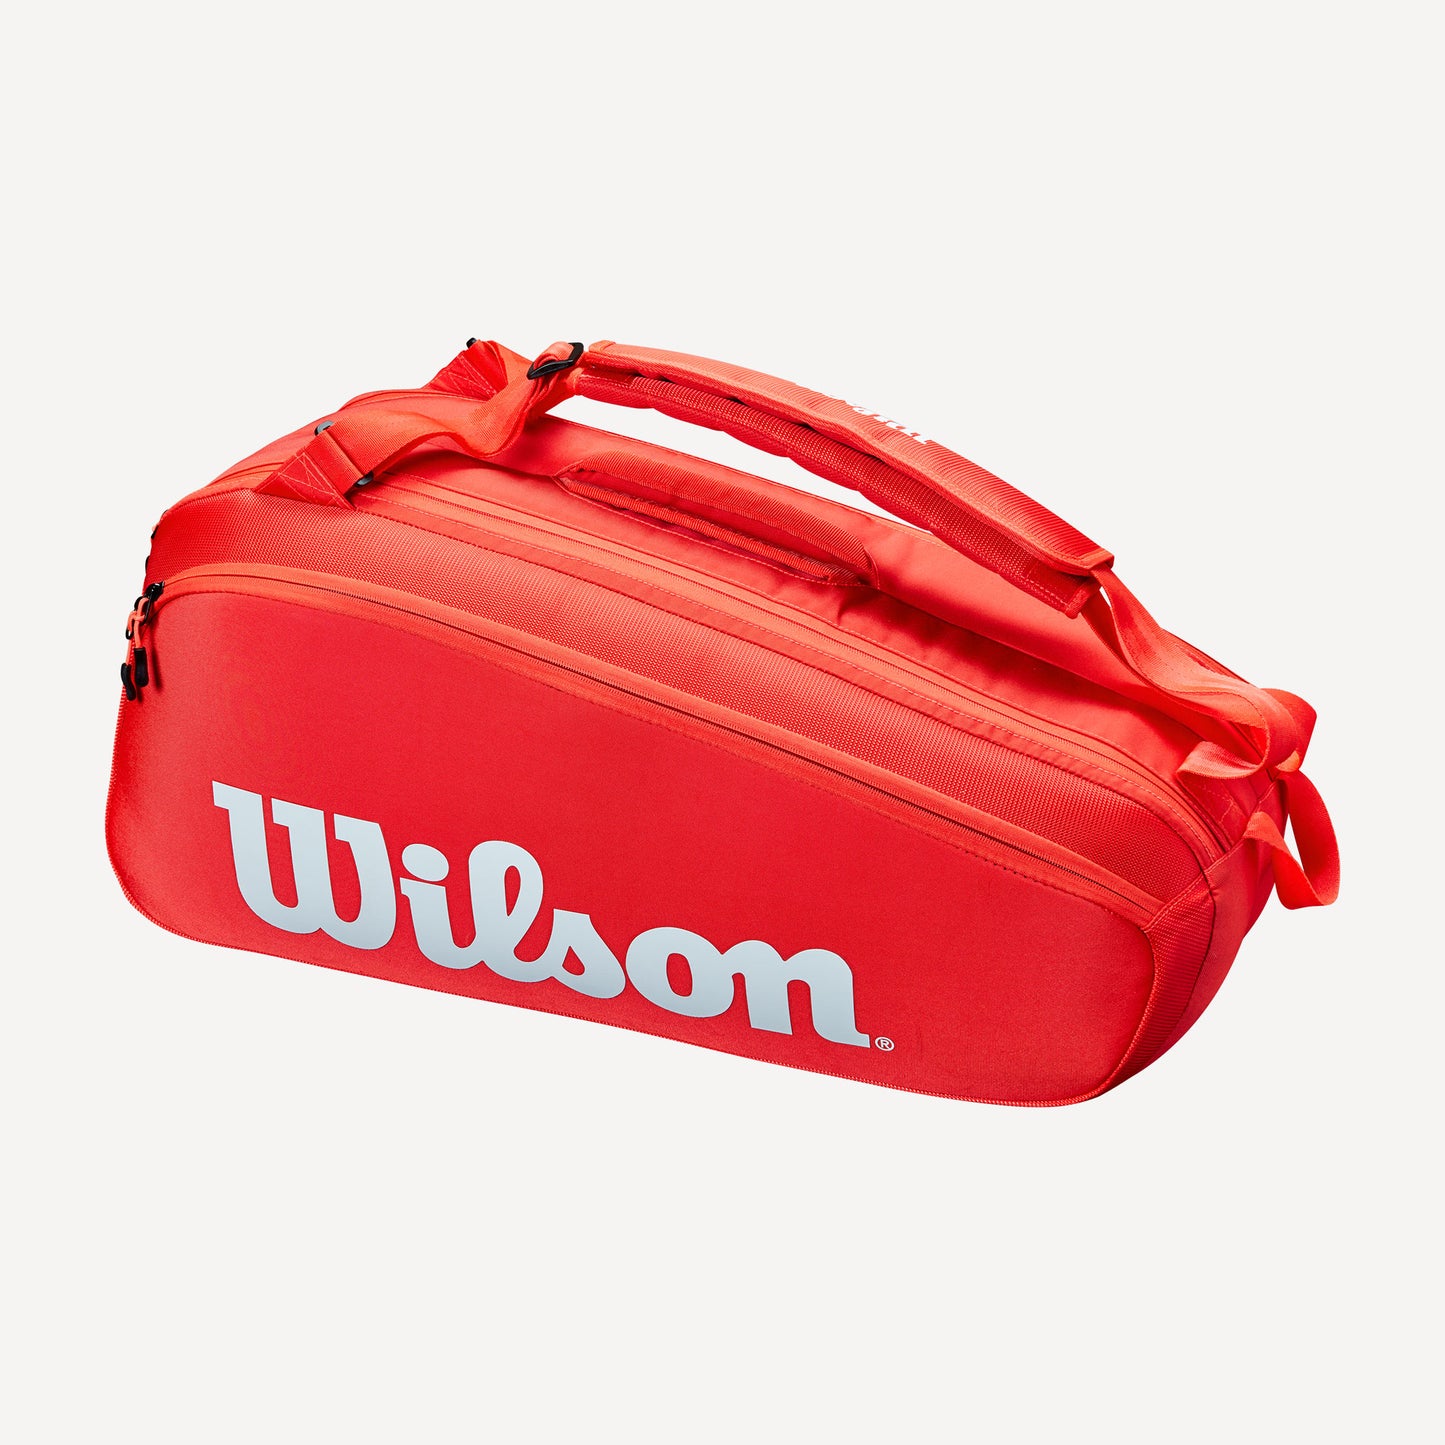 Wilson Super Tour 6 Pack Tennis Bag Red (2)